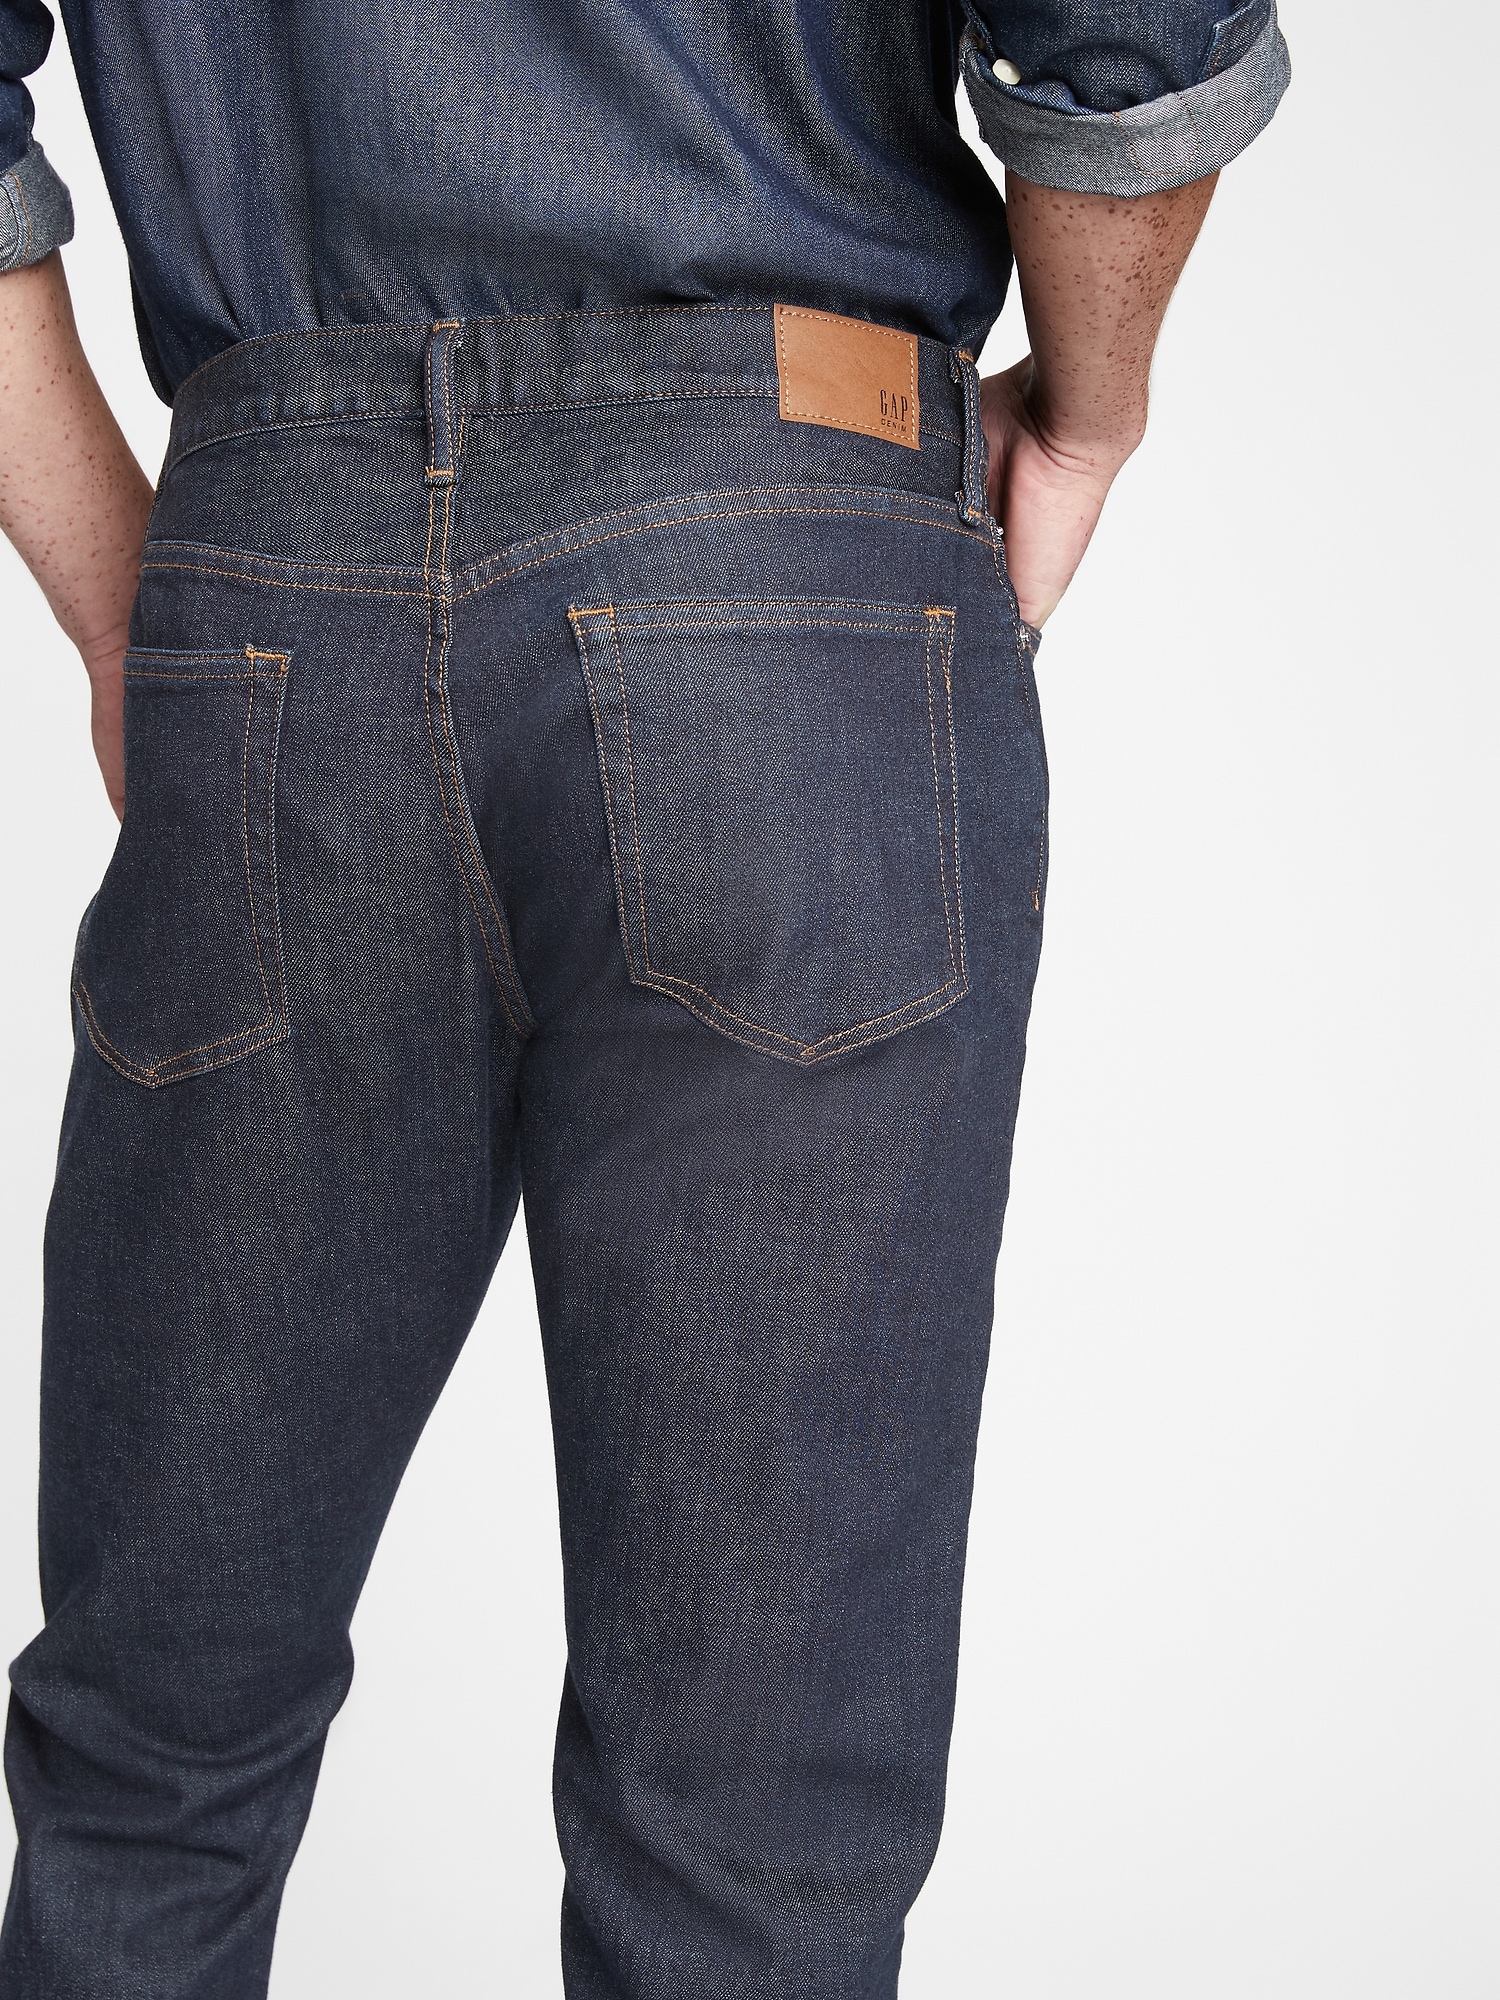 NWT Mens GAP Relaxed Taper GapFlex Denim Pants Jeans Choose Size Light Worn